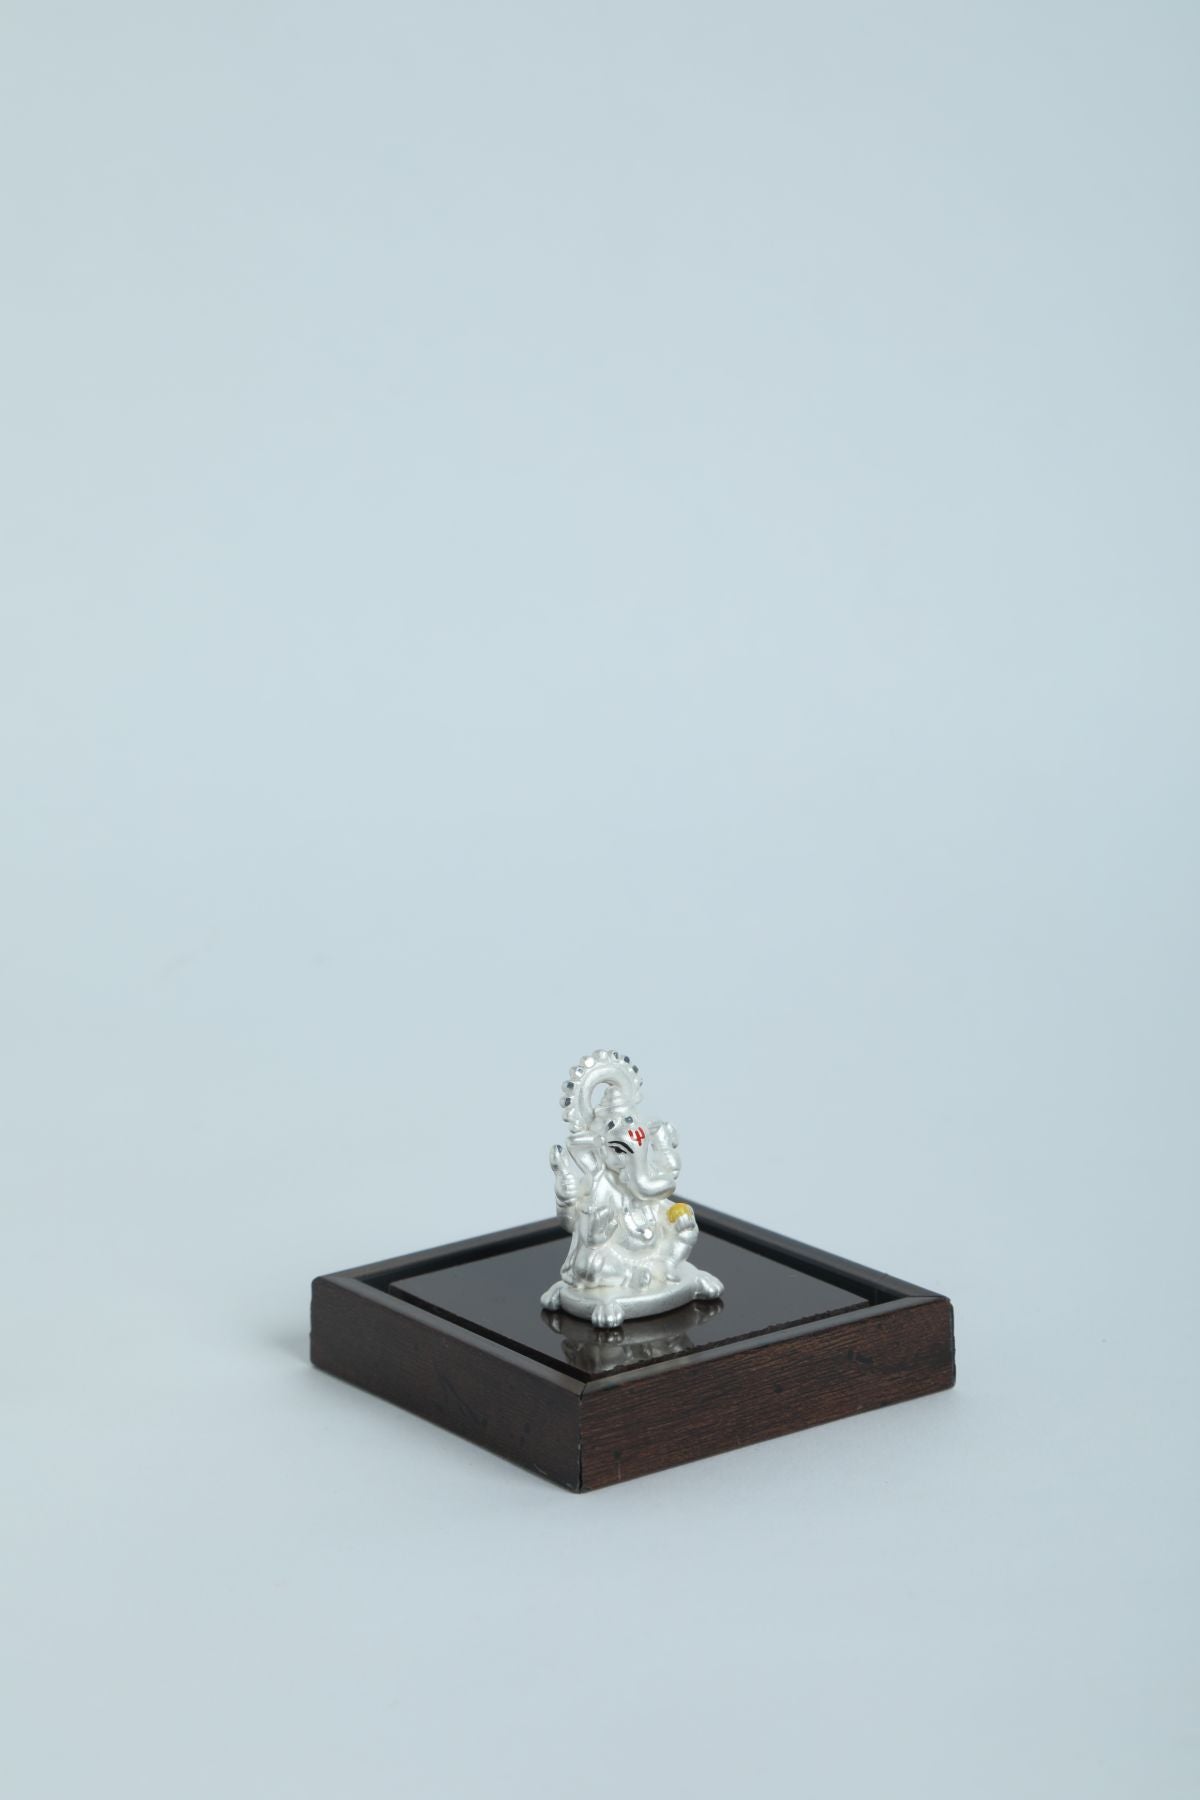 999 Pure Silver Ganesha Idol By Krysaliis Isvara - Krign_Ms07 Idols